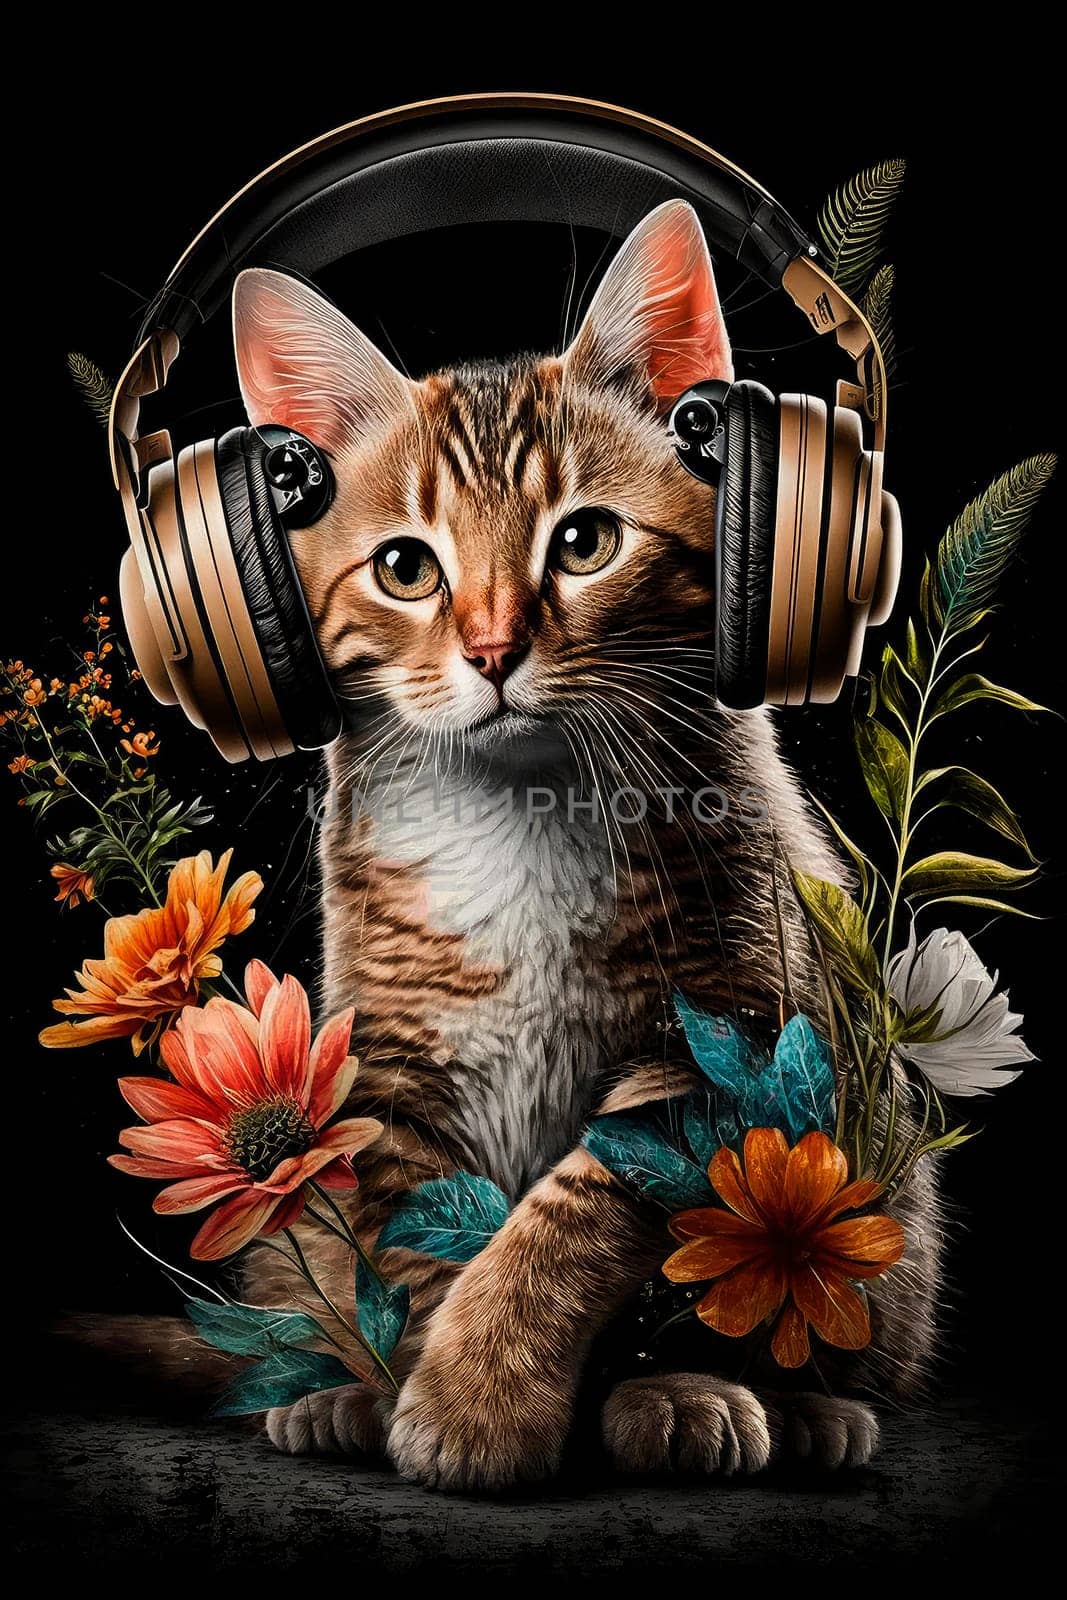 Cat with headphones. by yanadjana